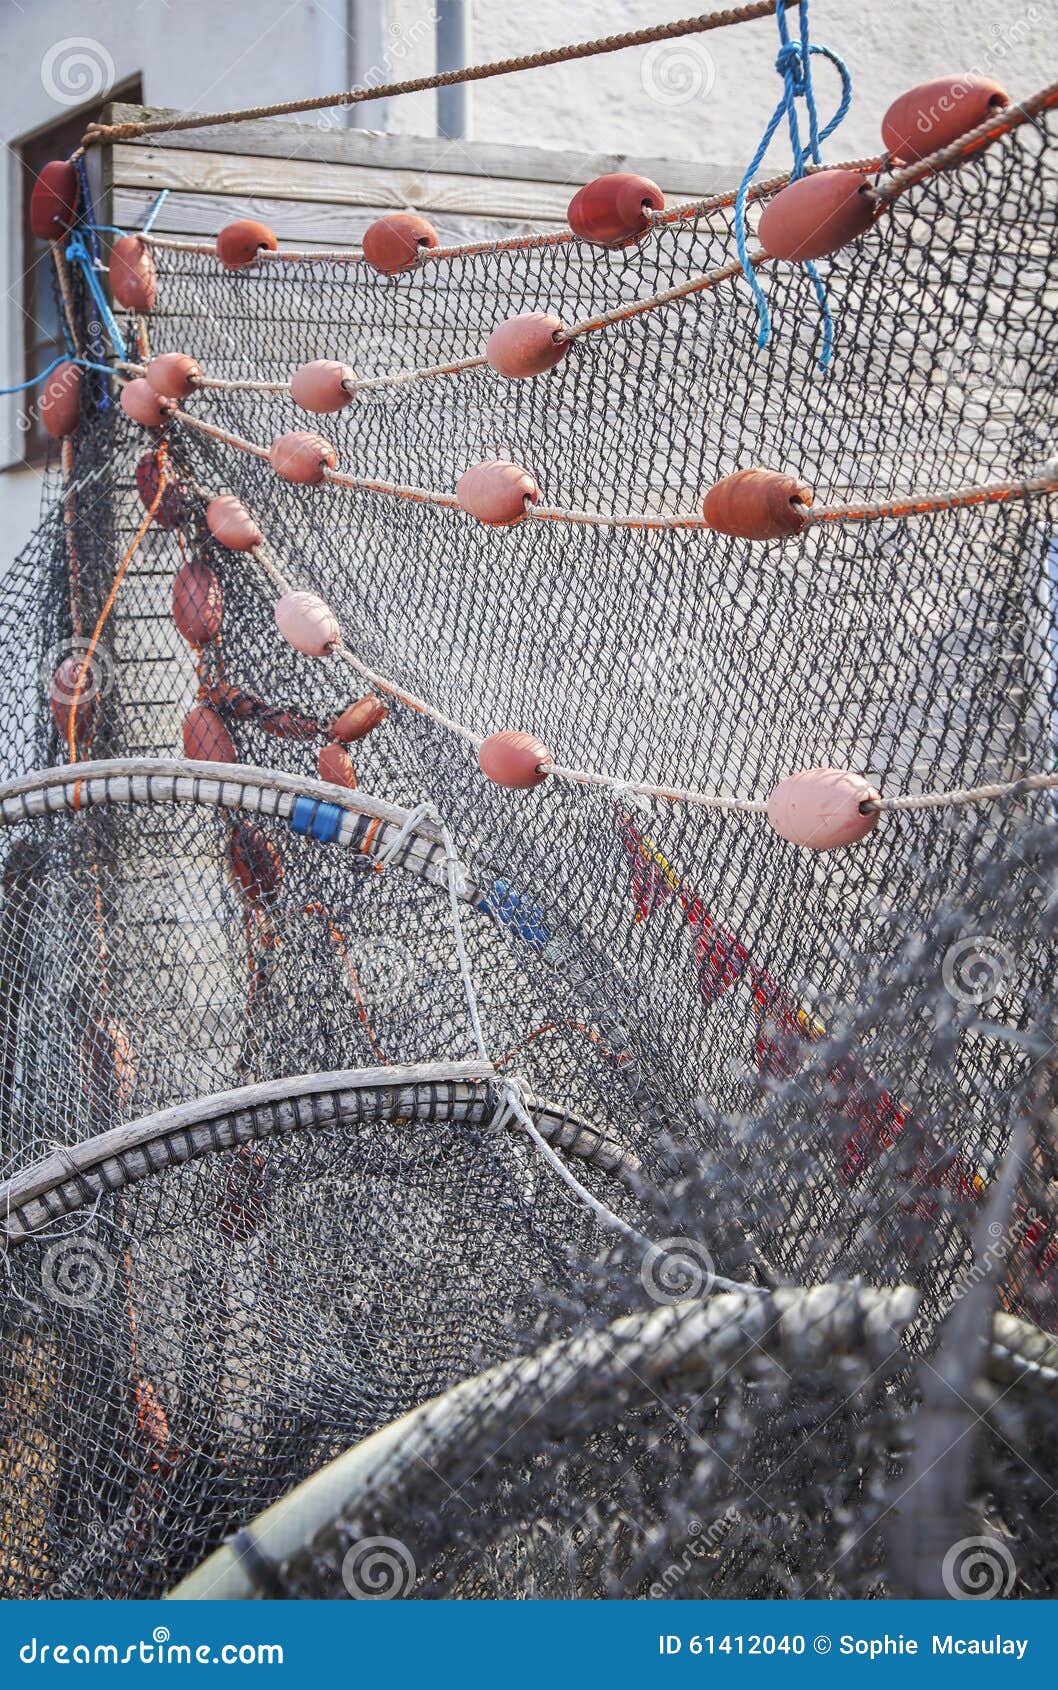 https://thumbs.dreamstime.com/z/fish-netting-image-large-vowen-fishing-net-hung-up-61412040.jpg